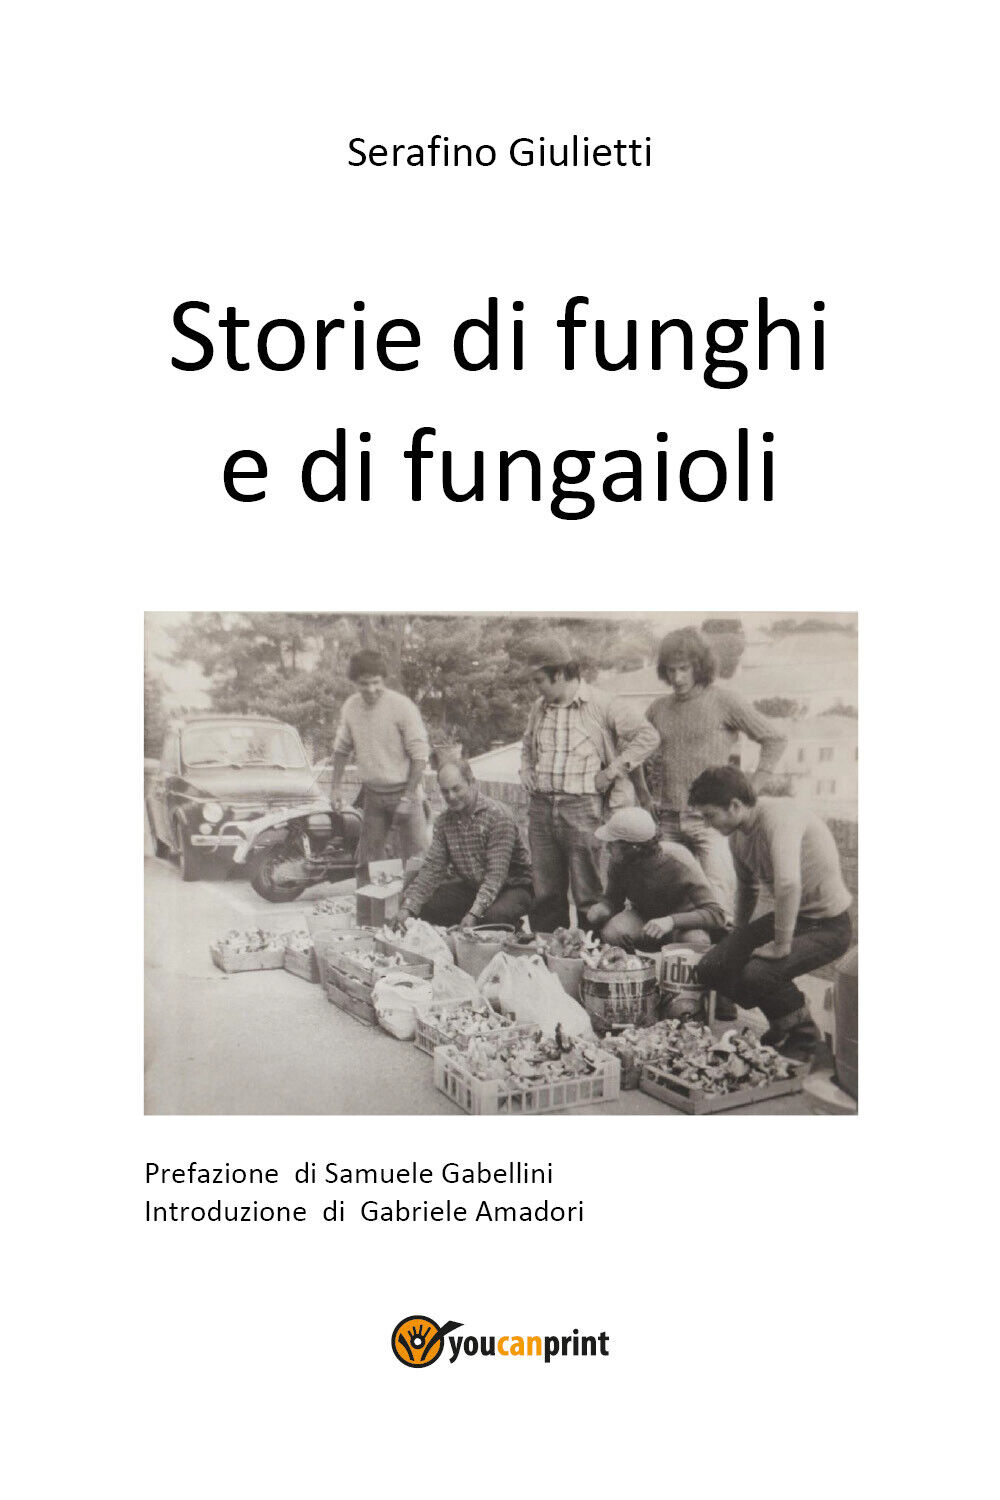 Storie di funghi e di fungaioli di Serafino Giulietti,  2021,  Youcanprint